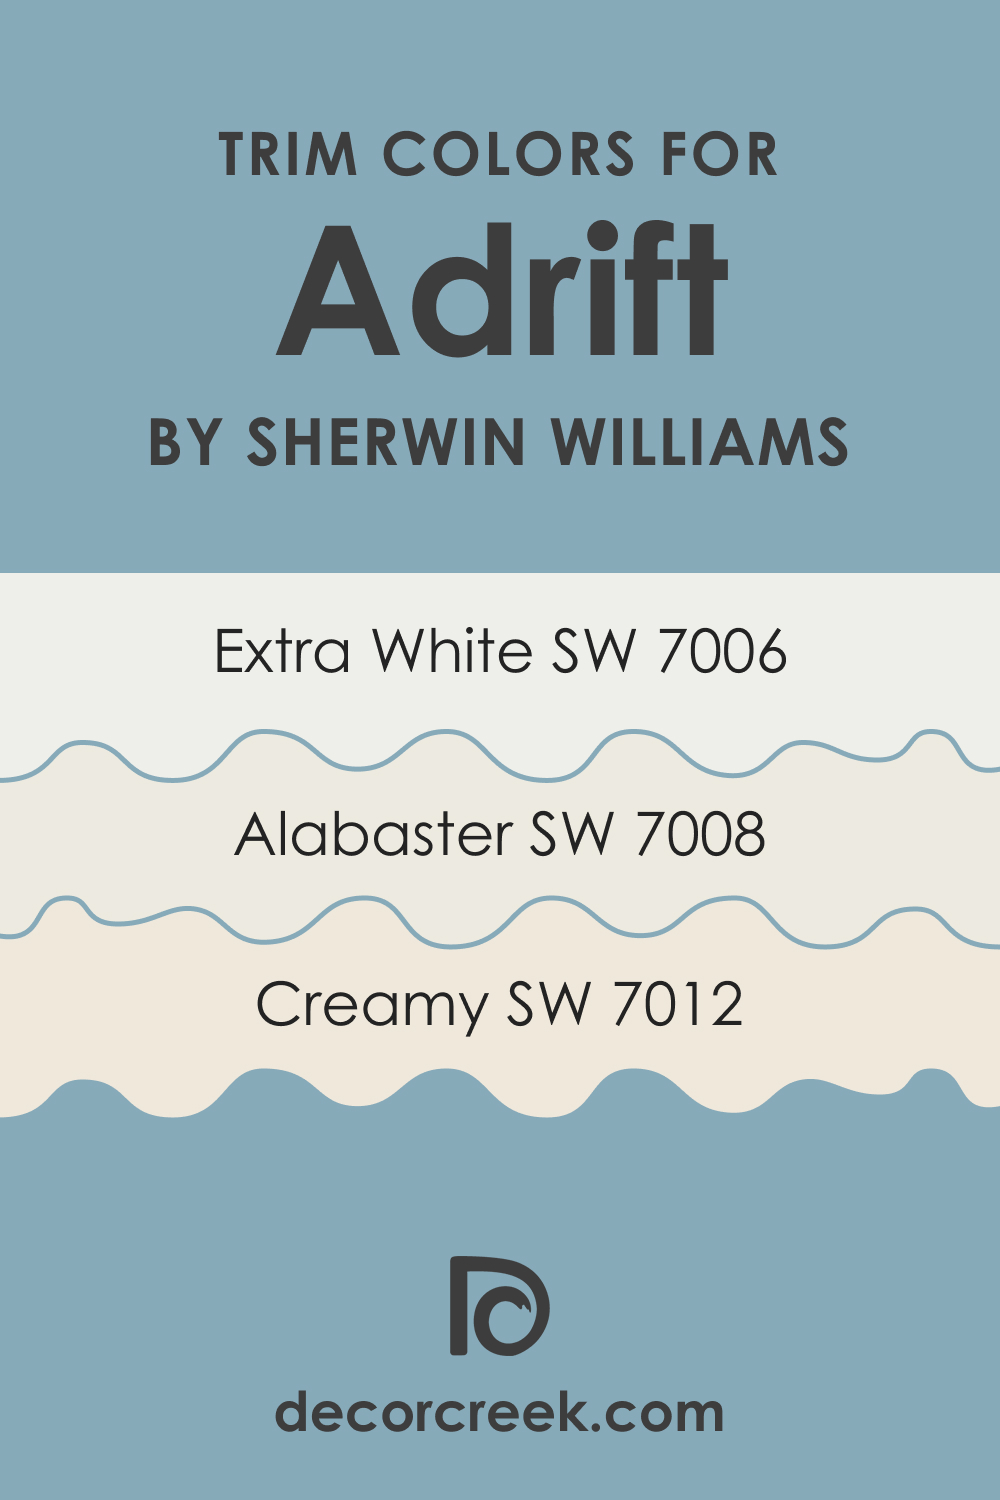 Trim Colors of SW 7608 Adrift